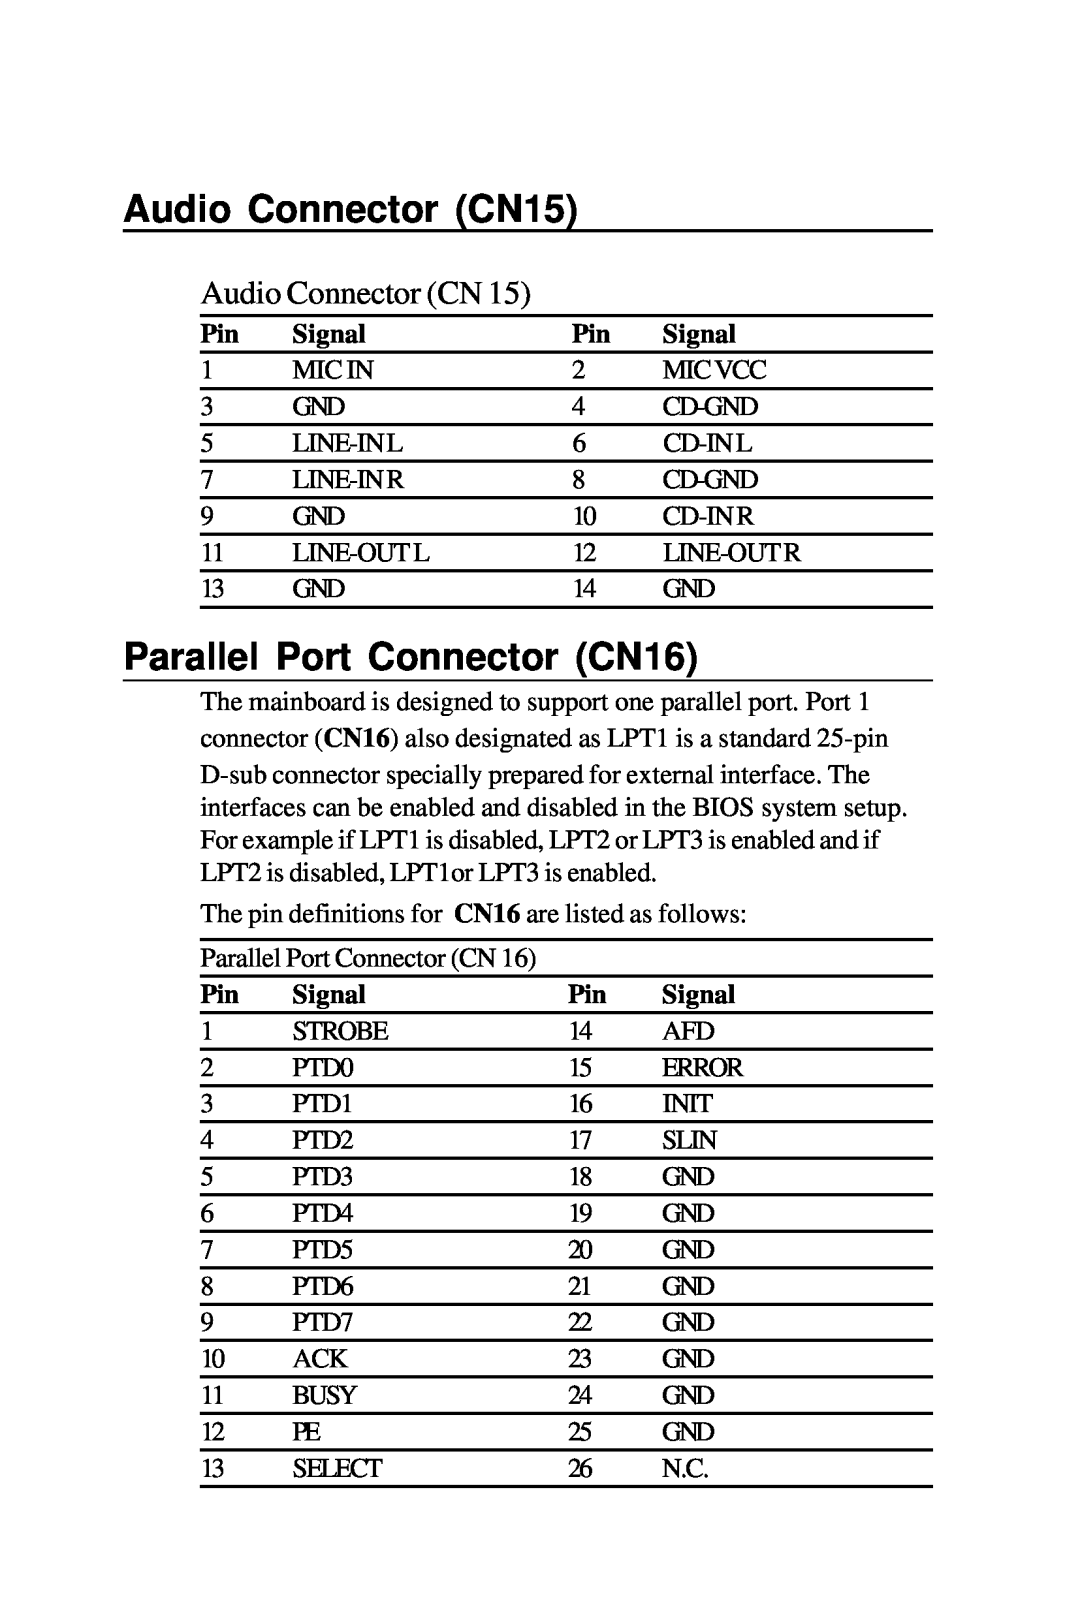 Intel PCM-6896 manual Audio Connector CN15, Parallel Port Connector CN16 